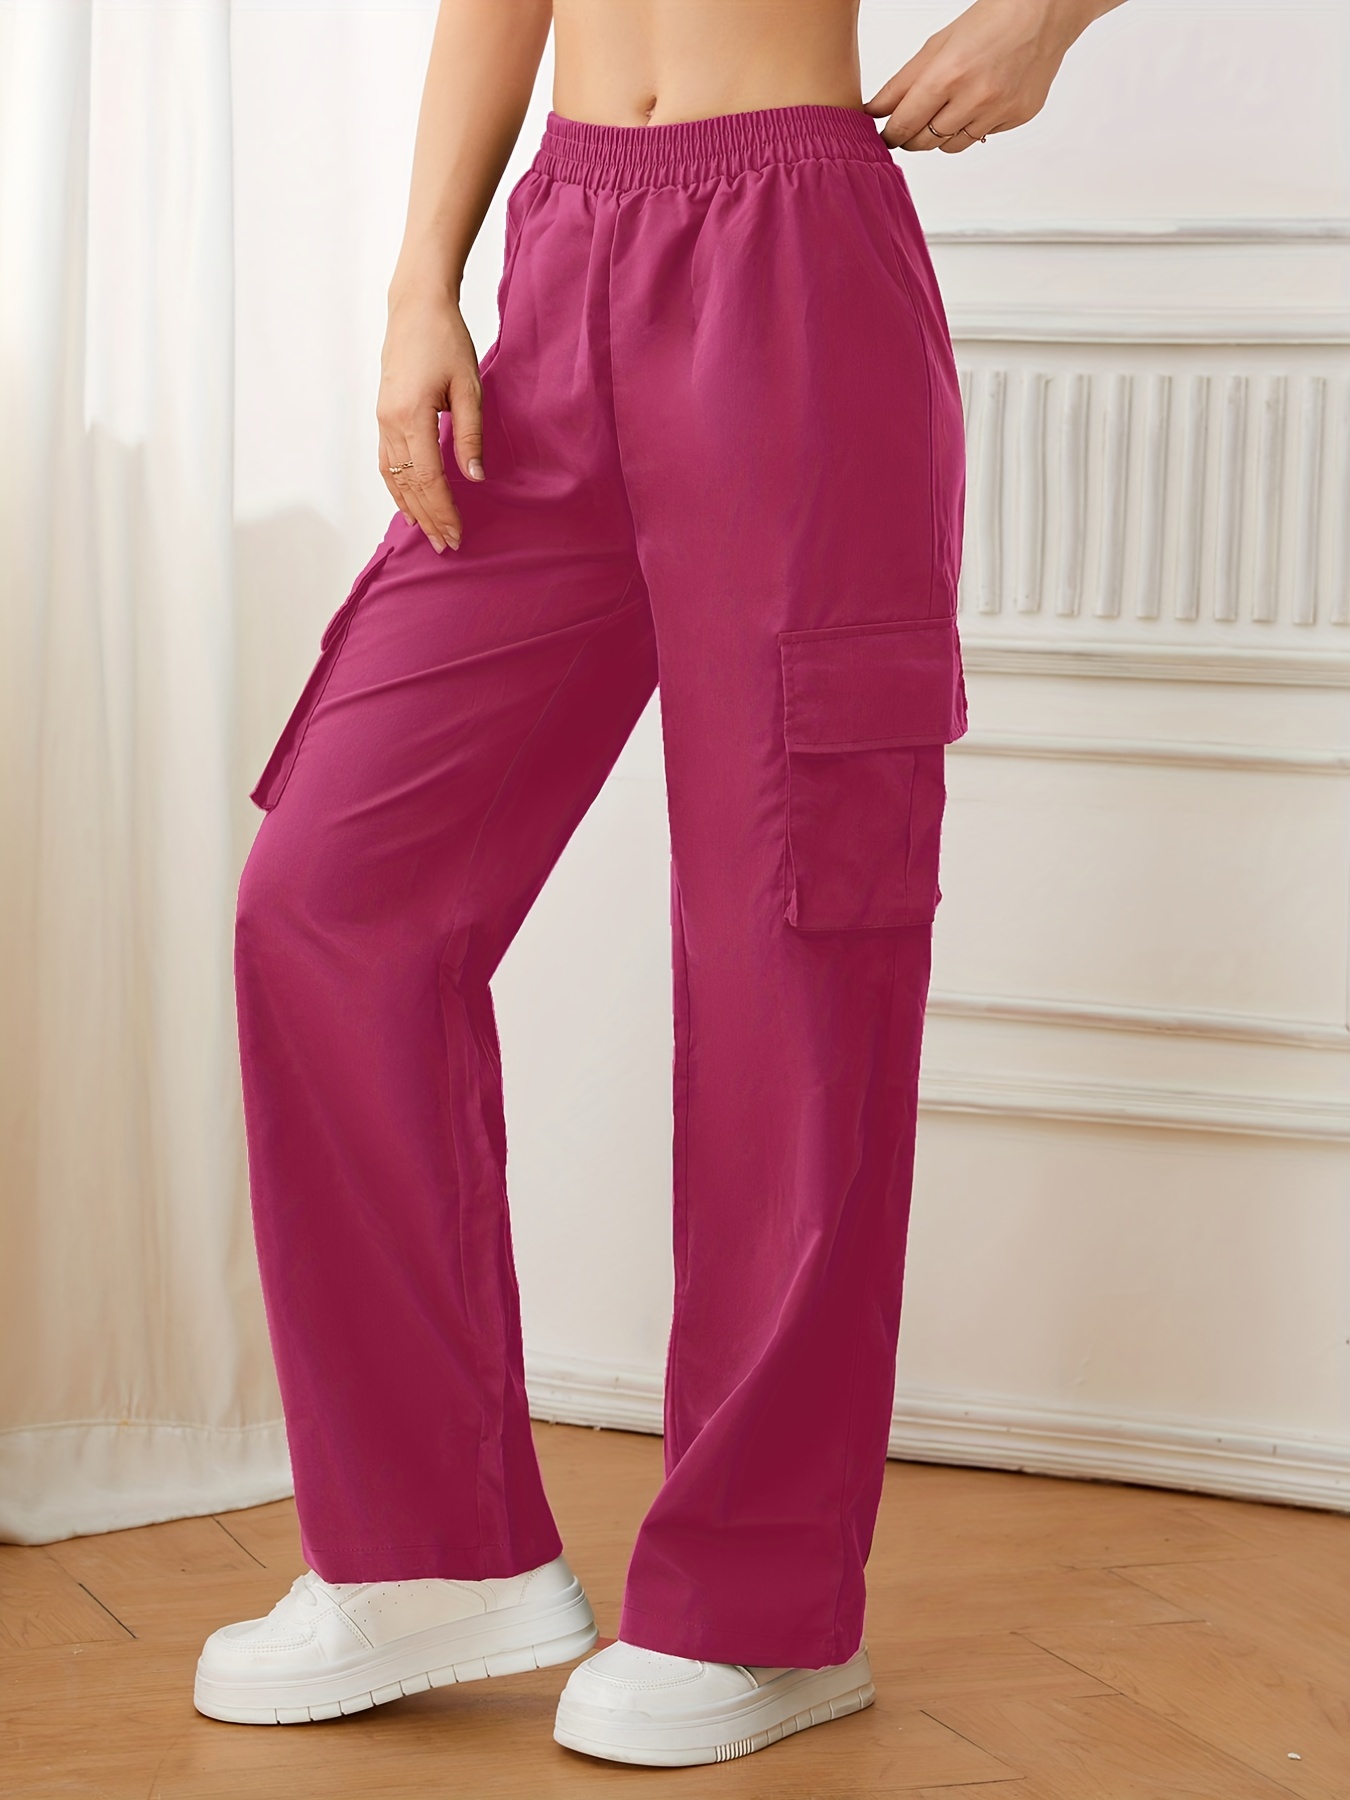 Cargo Pants Women Pink Color, Cargo Pants High Waist Pink